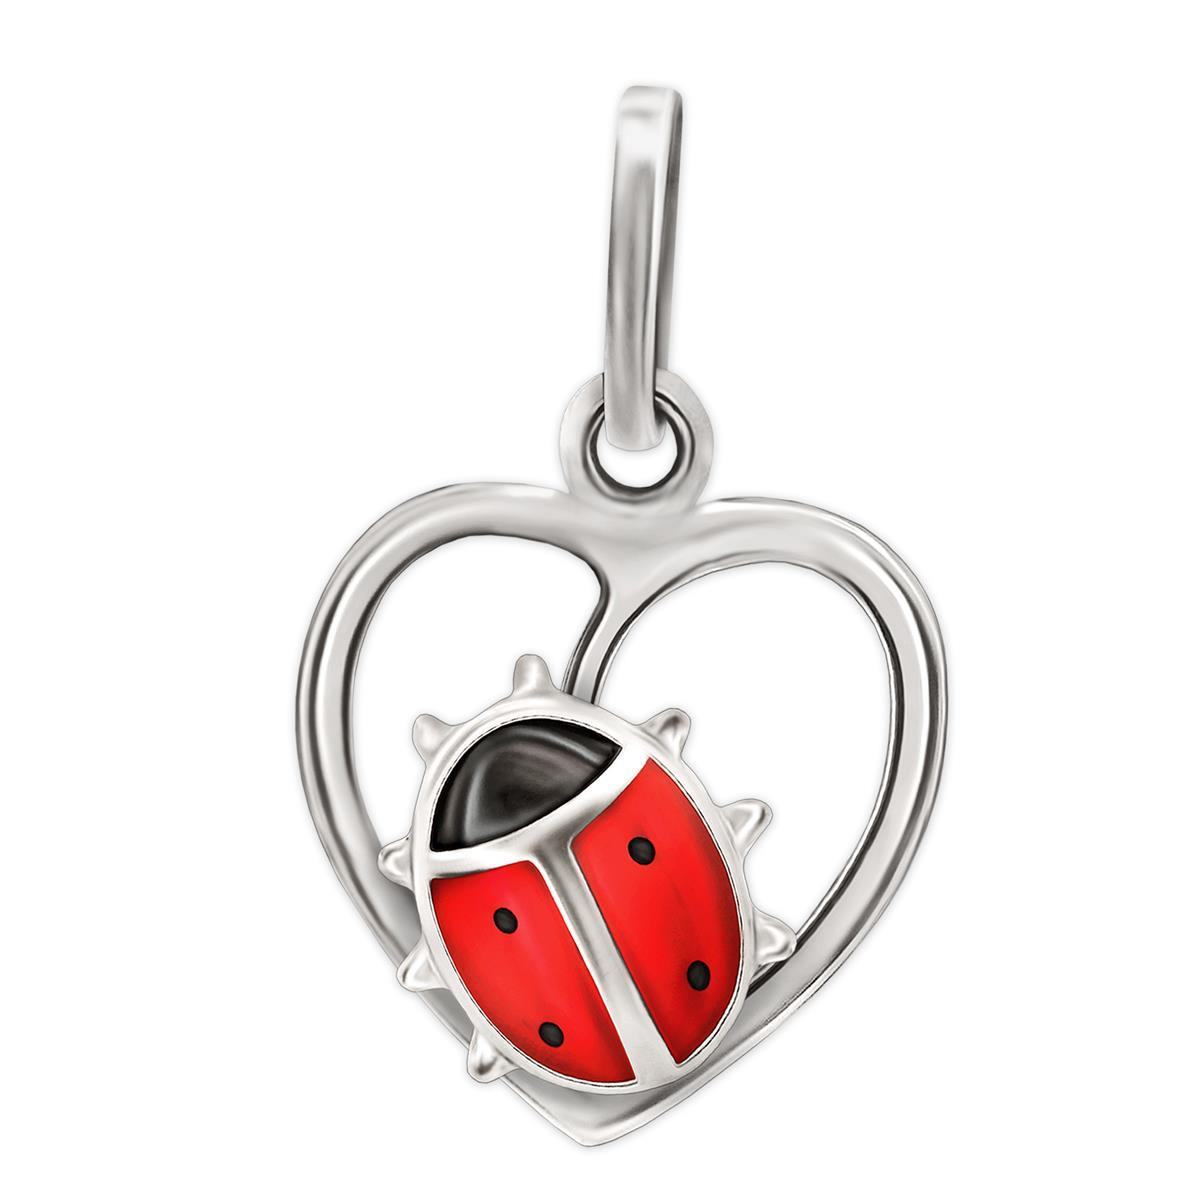 Anhänger Marienkäfer im Herz 10mm rot  schwarz glänzend lackiert Echt Silber 925